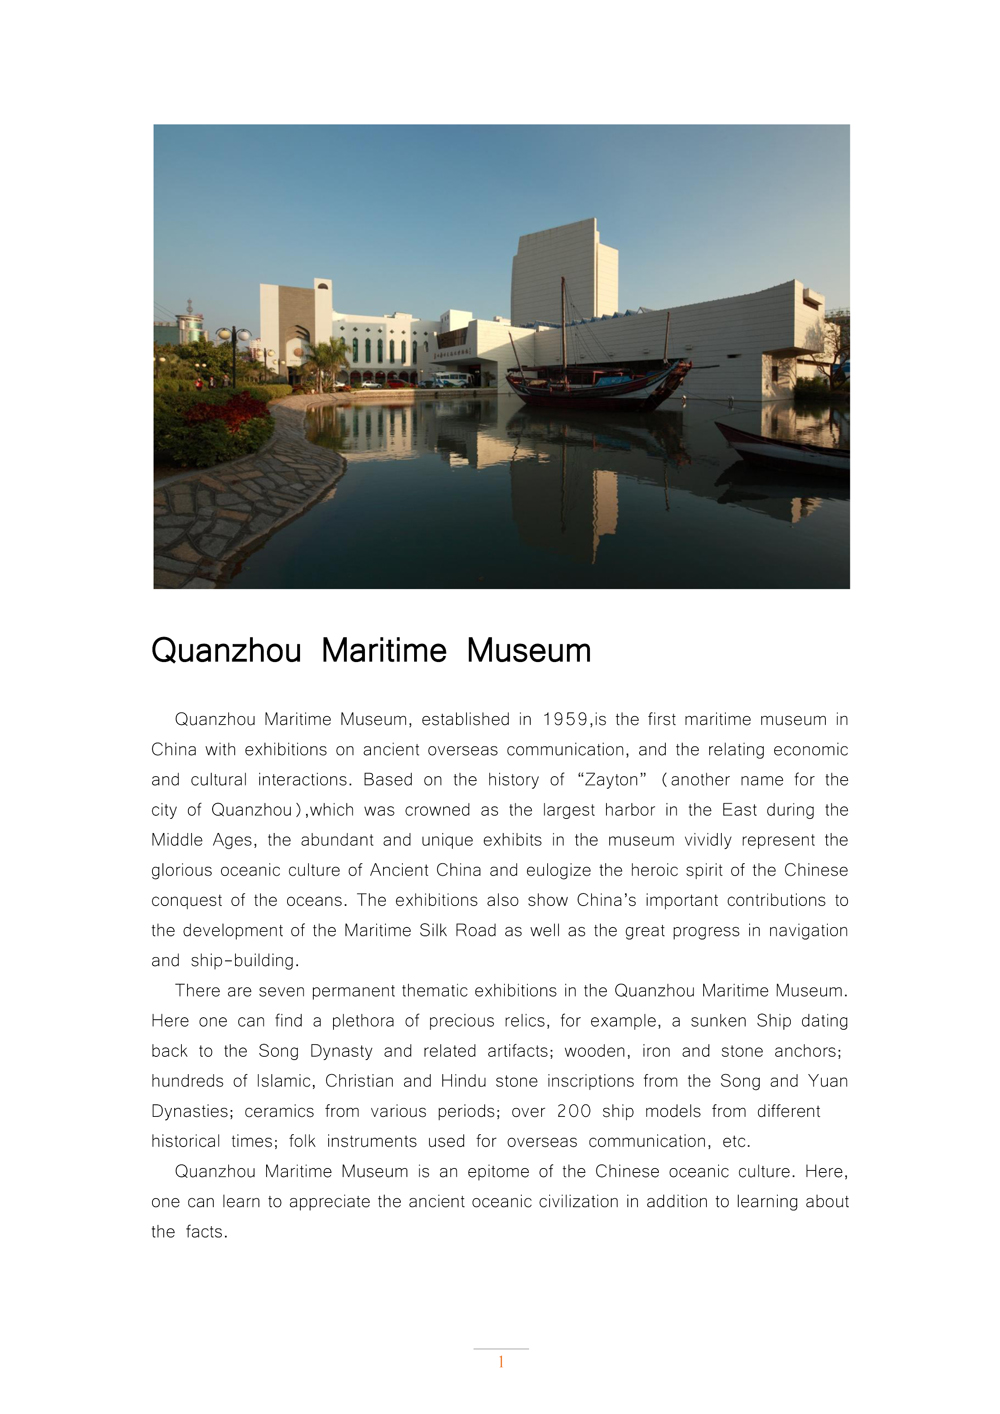 Quanzhou Maritime Museum-1.jpg